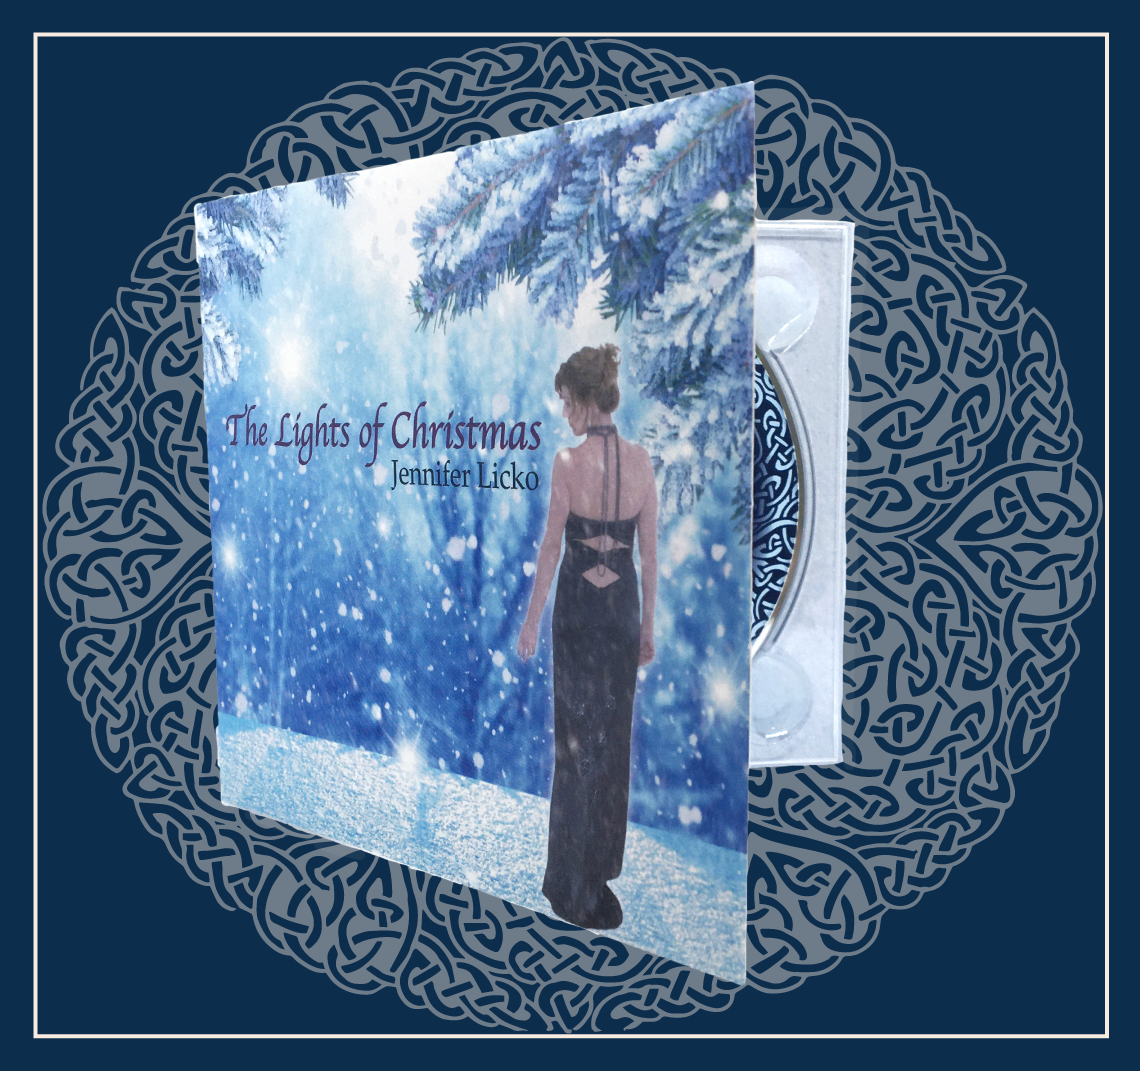 Celtic Christmas CD